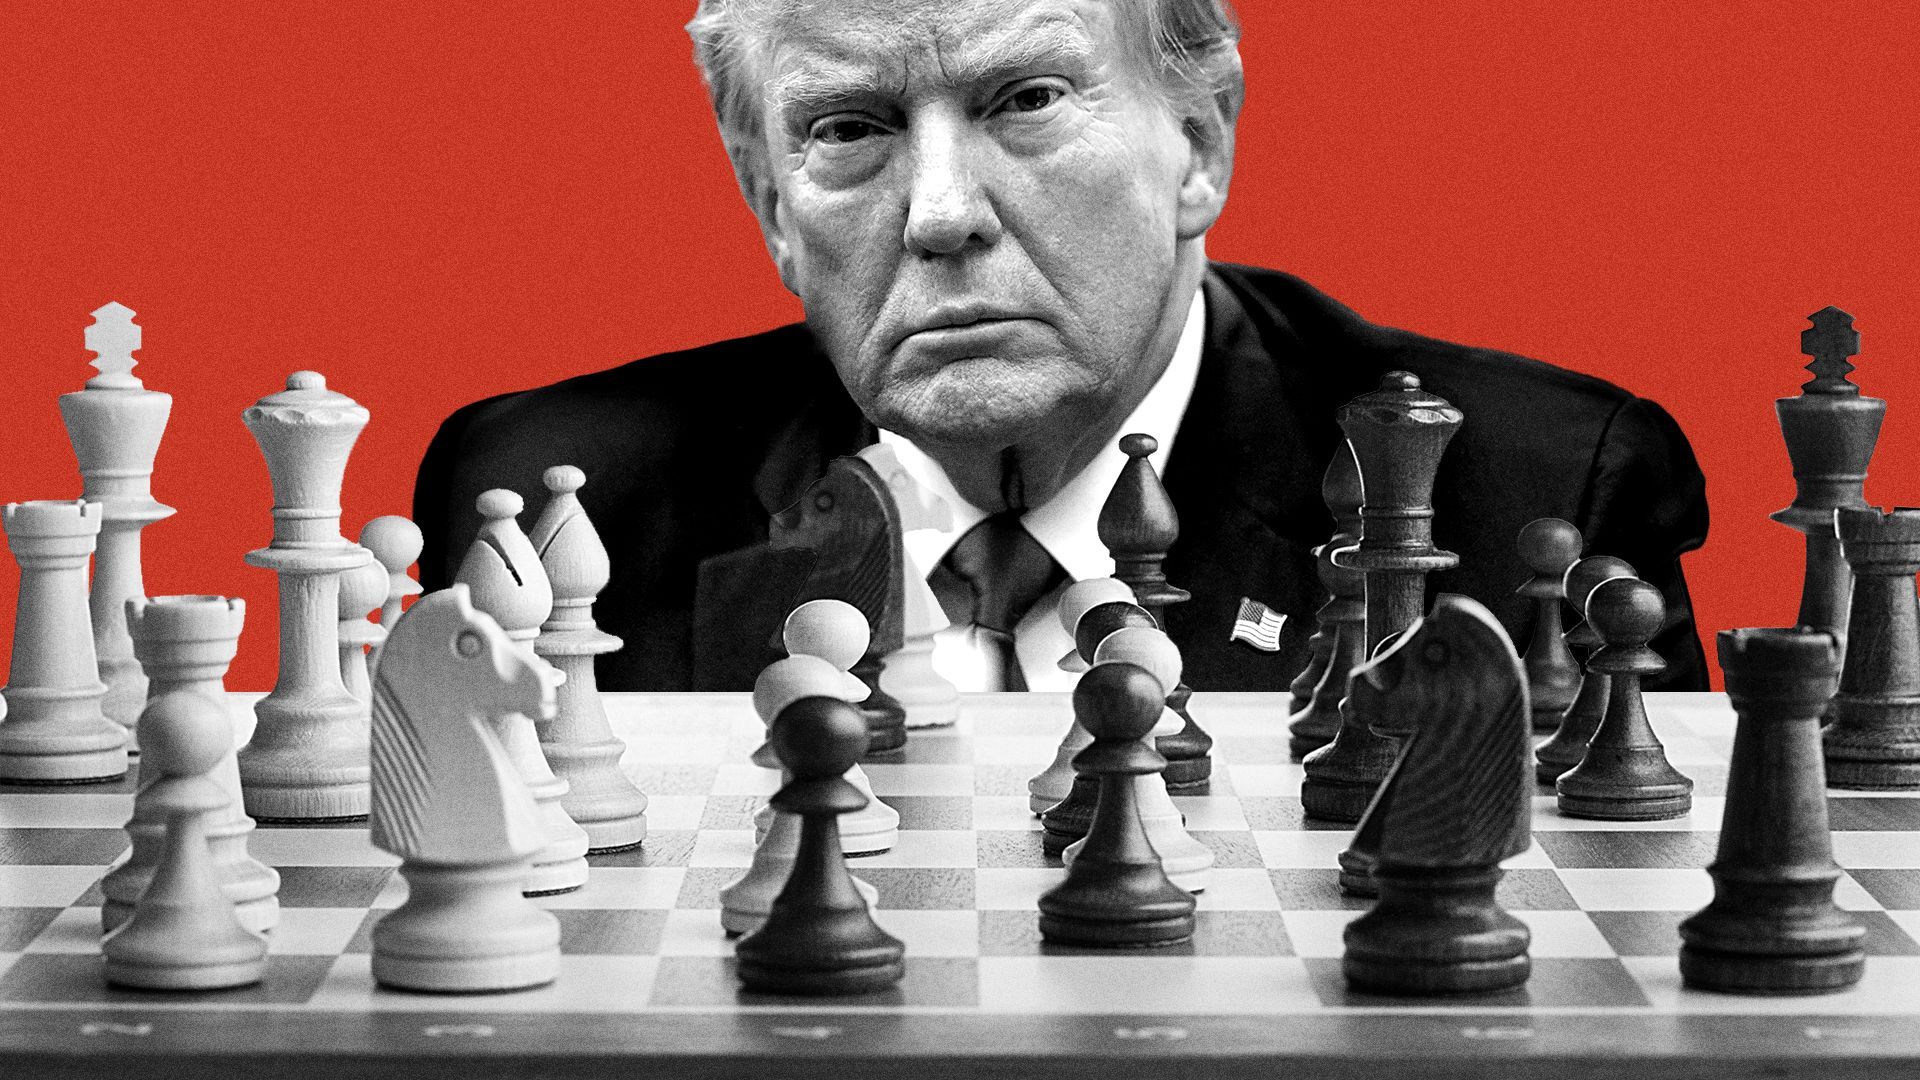 Photo iIllustration of Donald Trump behind a chessboard.